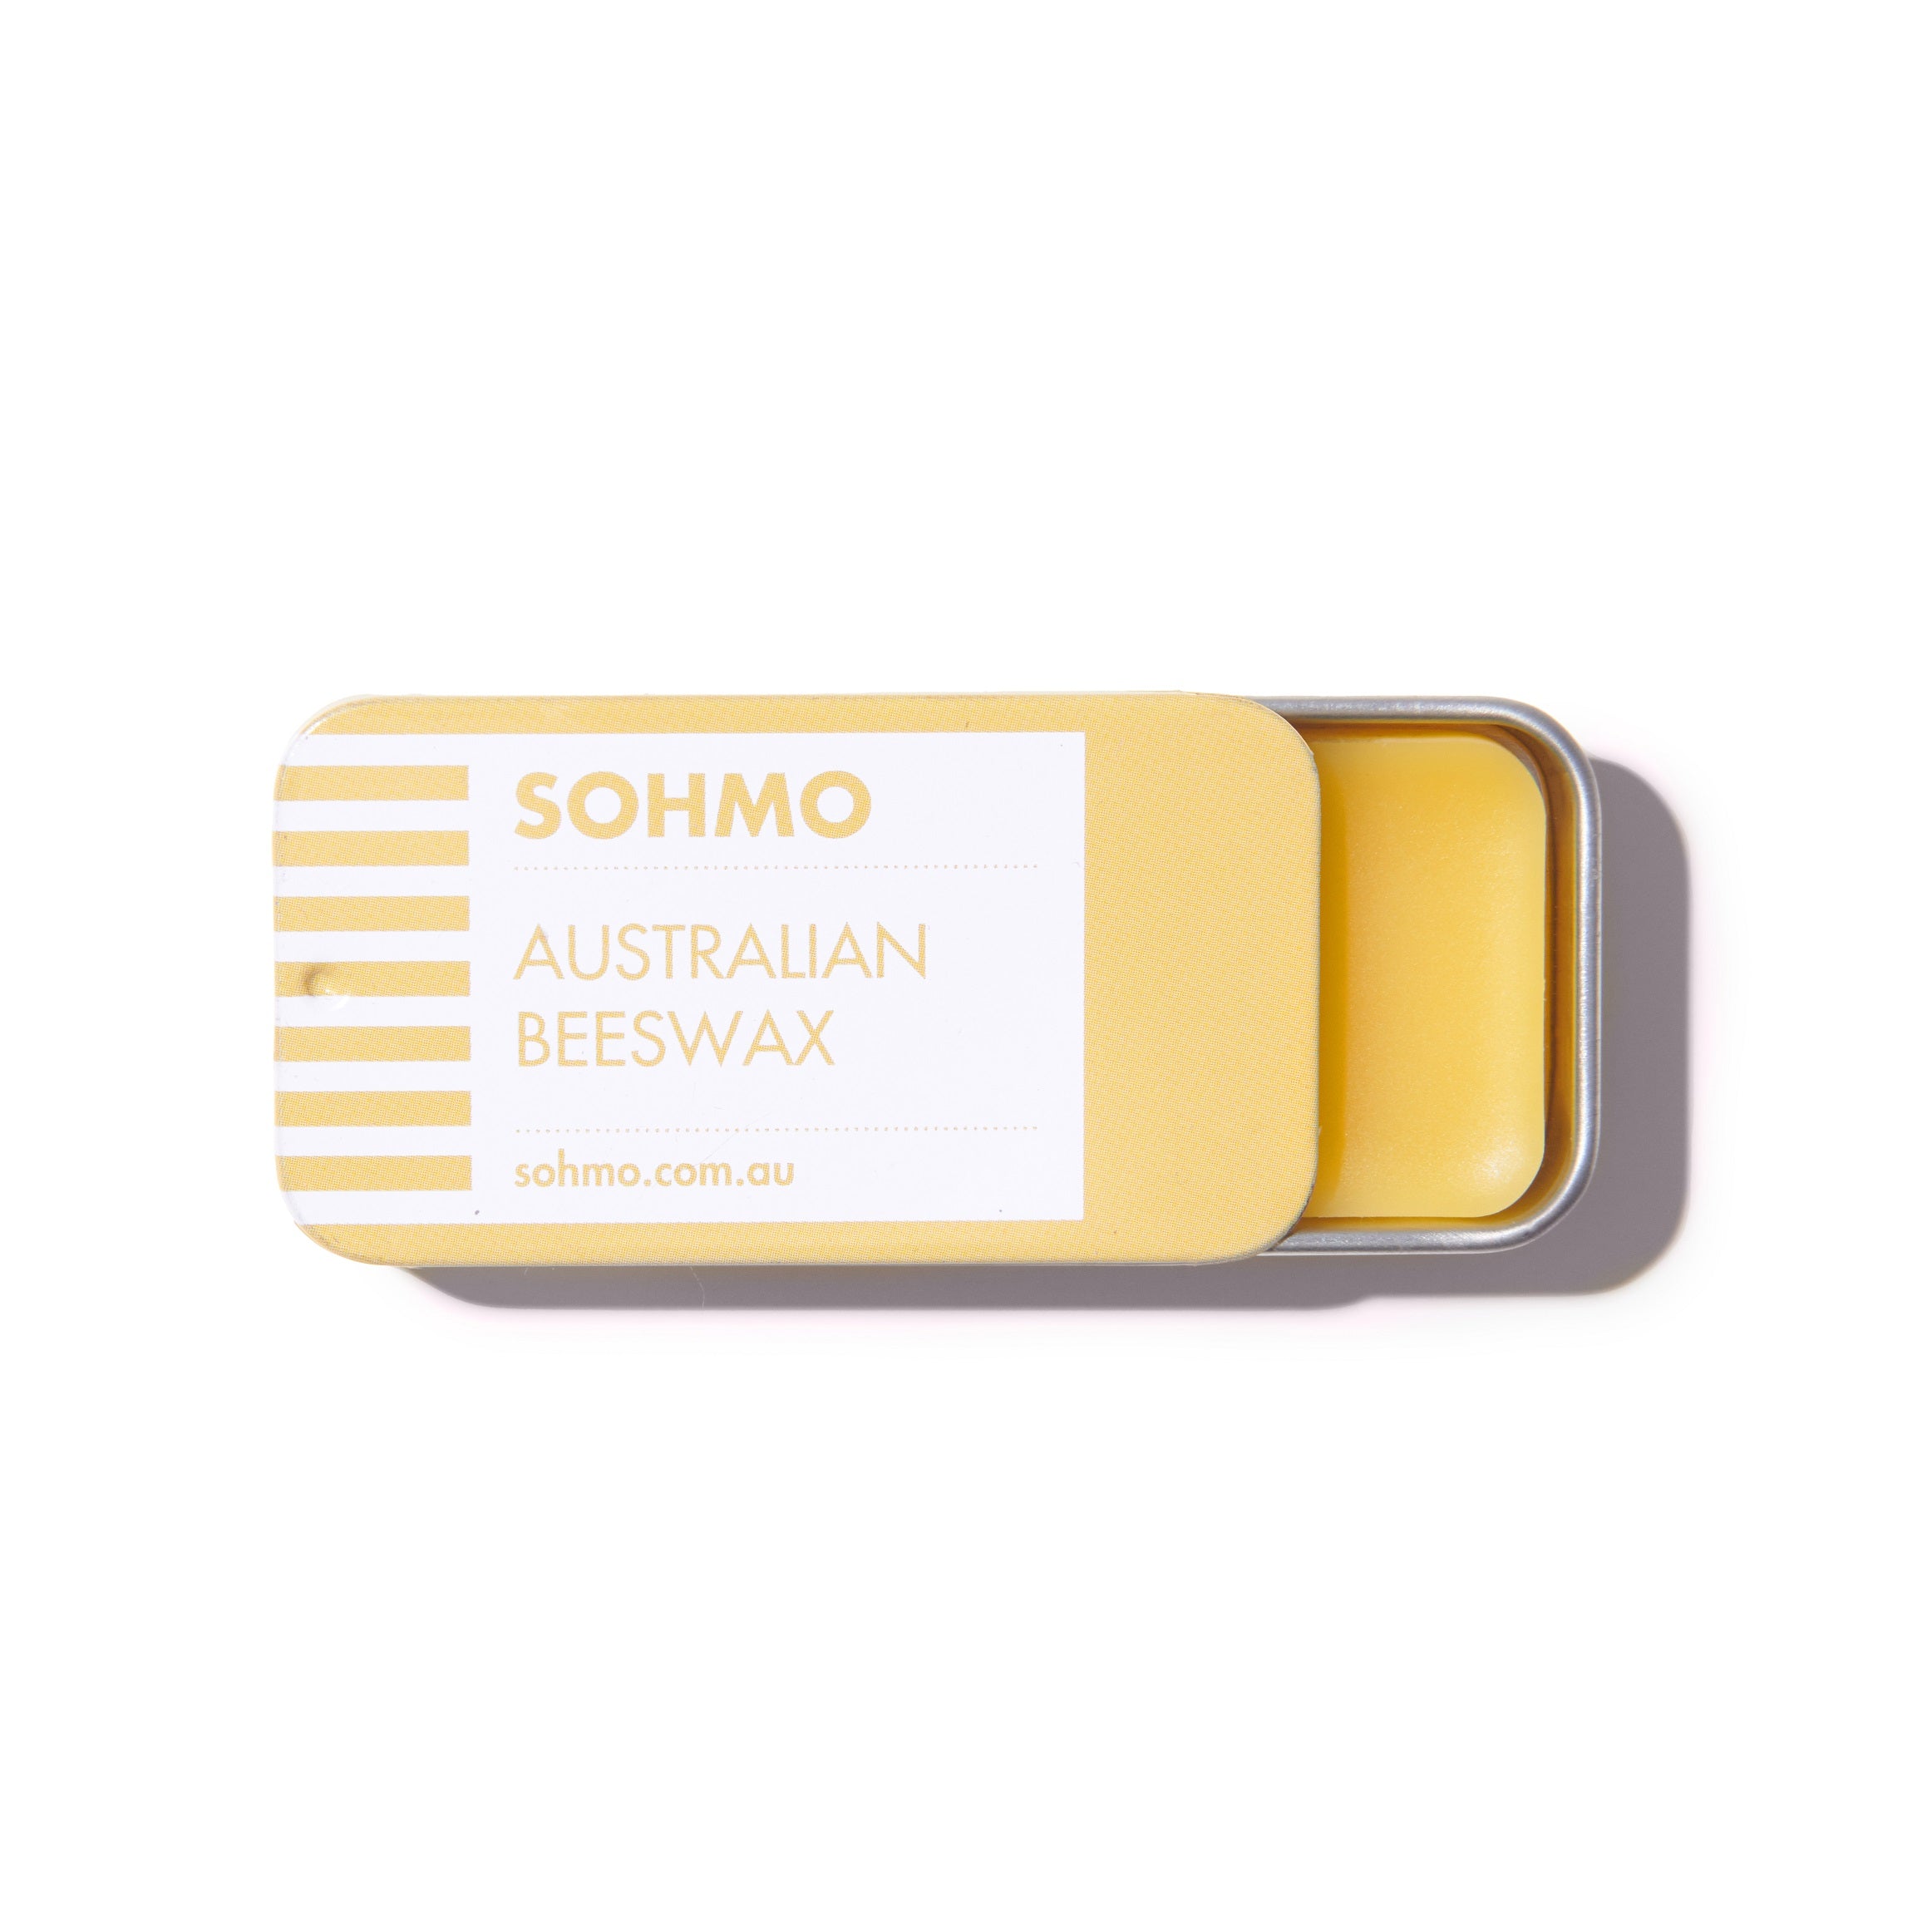 SOHMO Pure Australian Beeswax in small tin